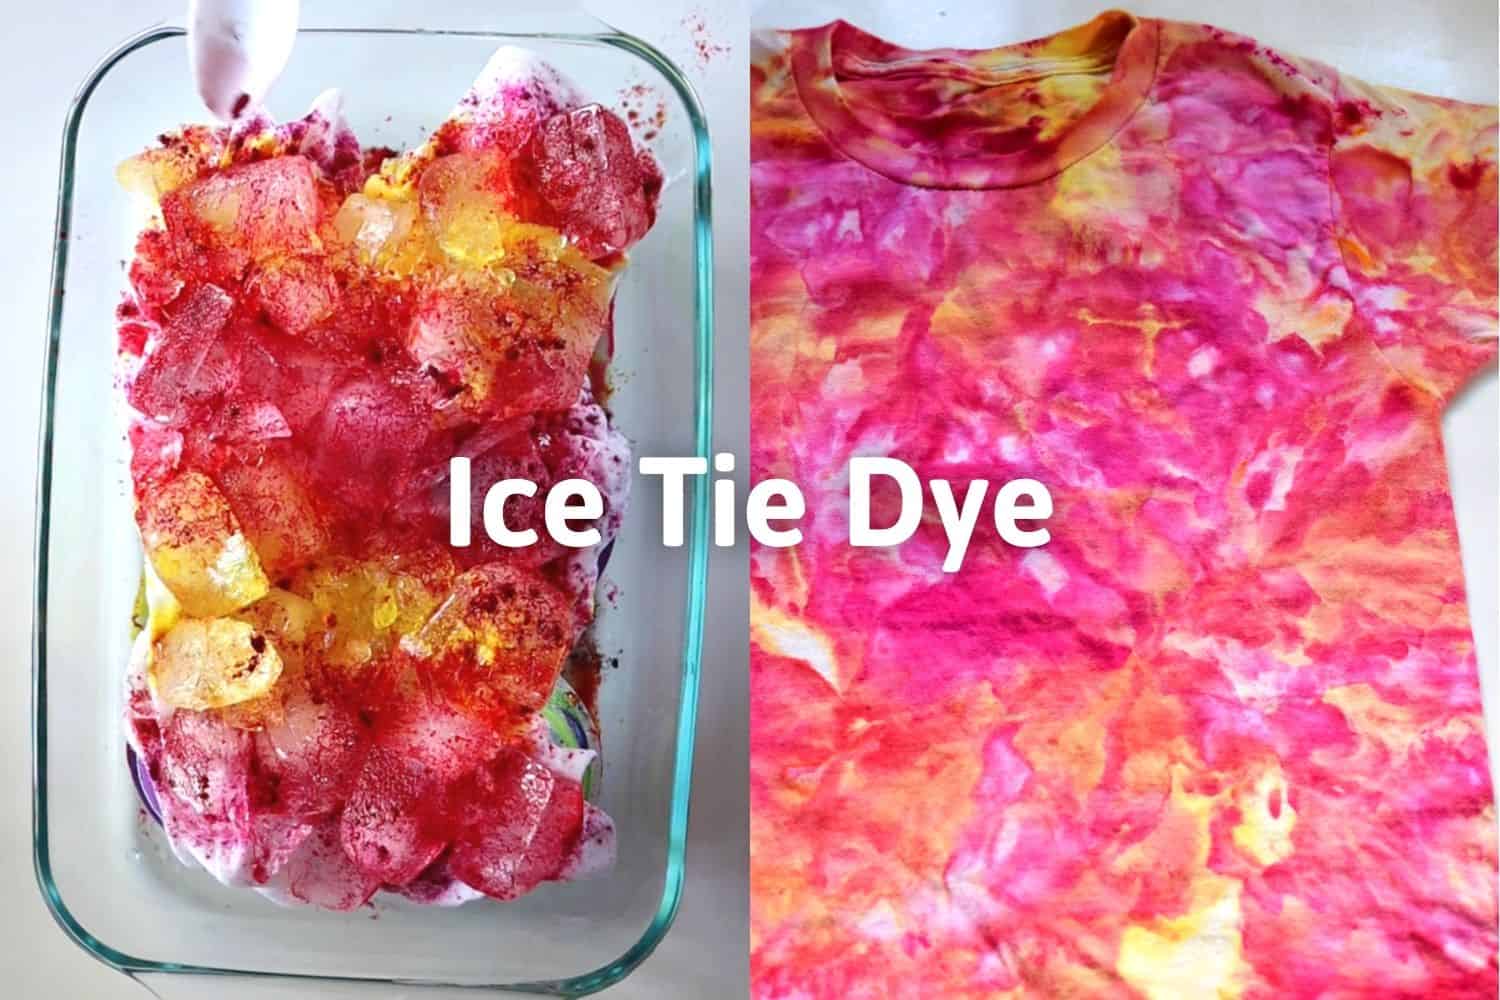 tie dye ice method - mauhidalgo7